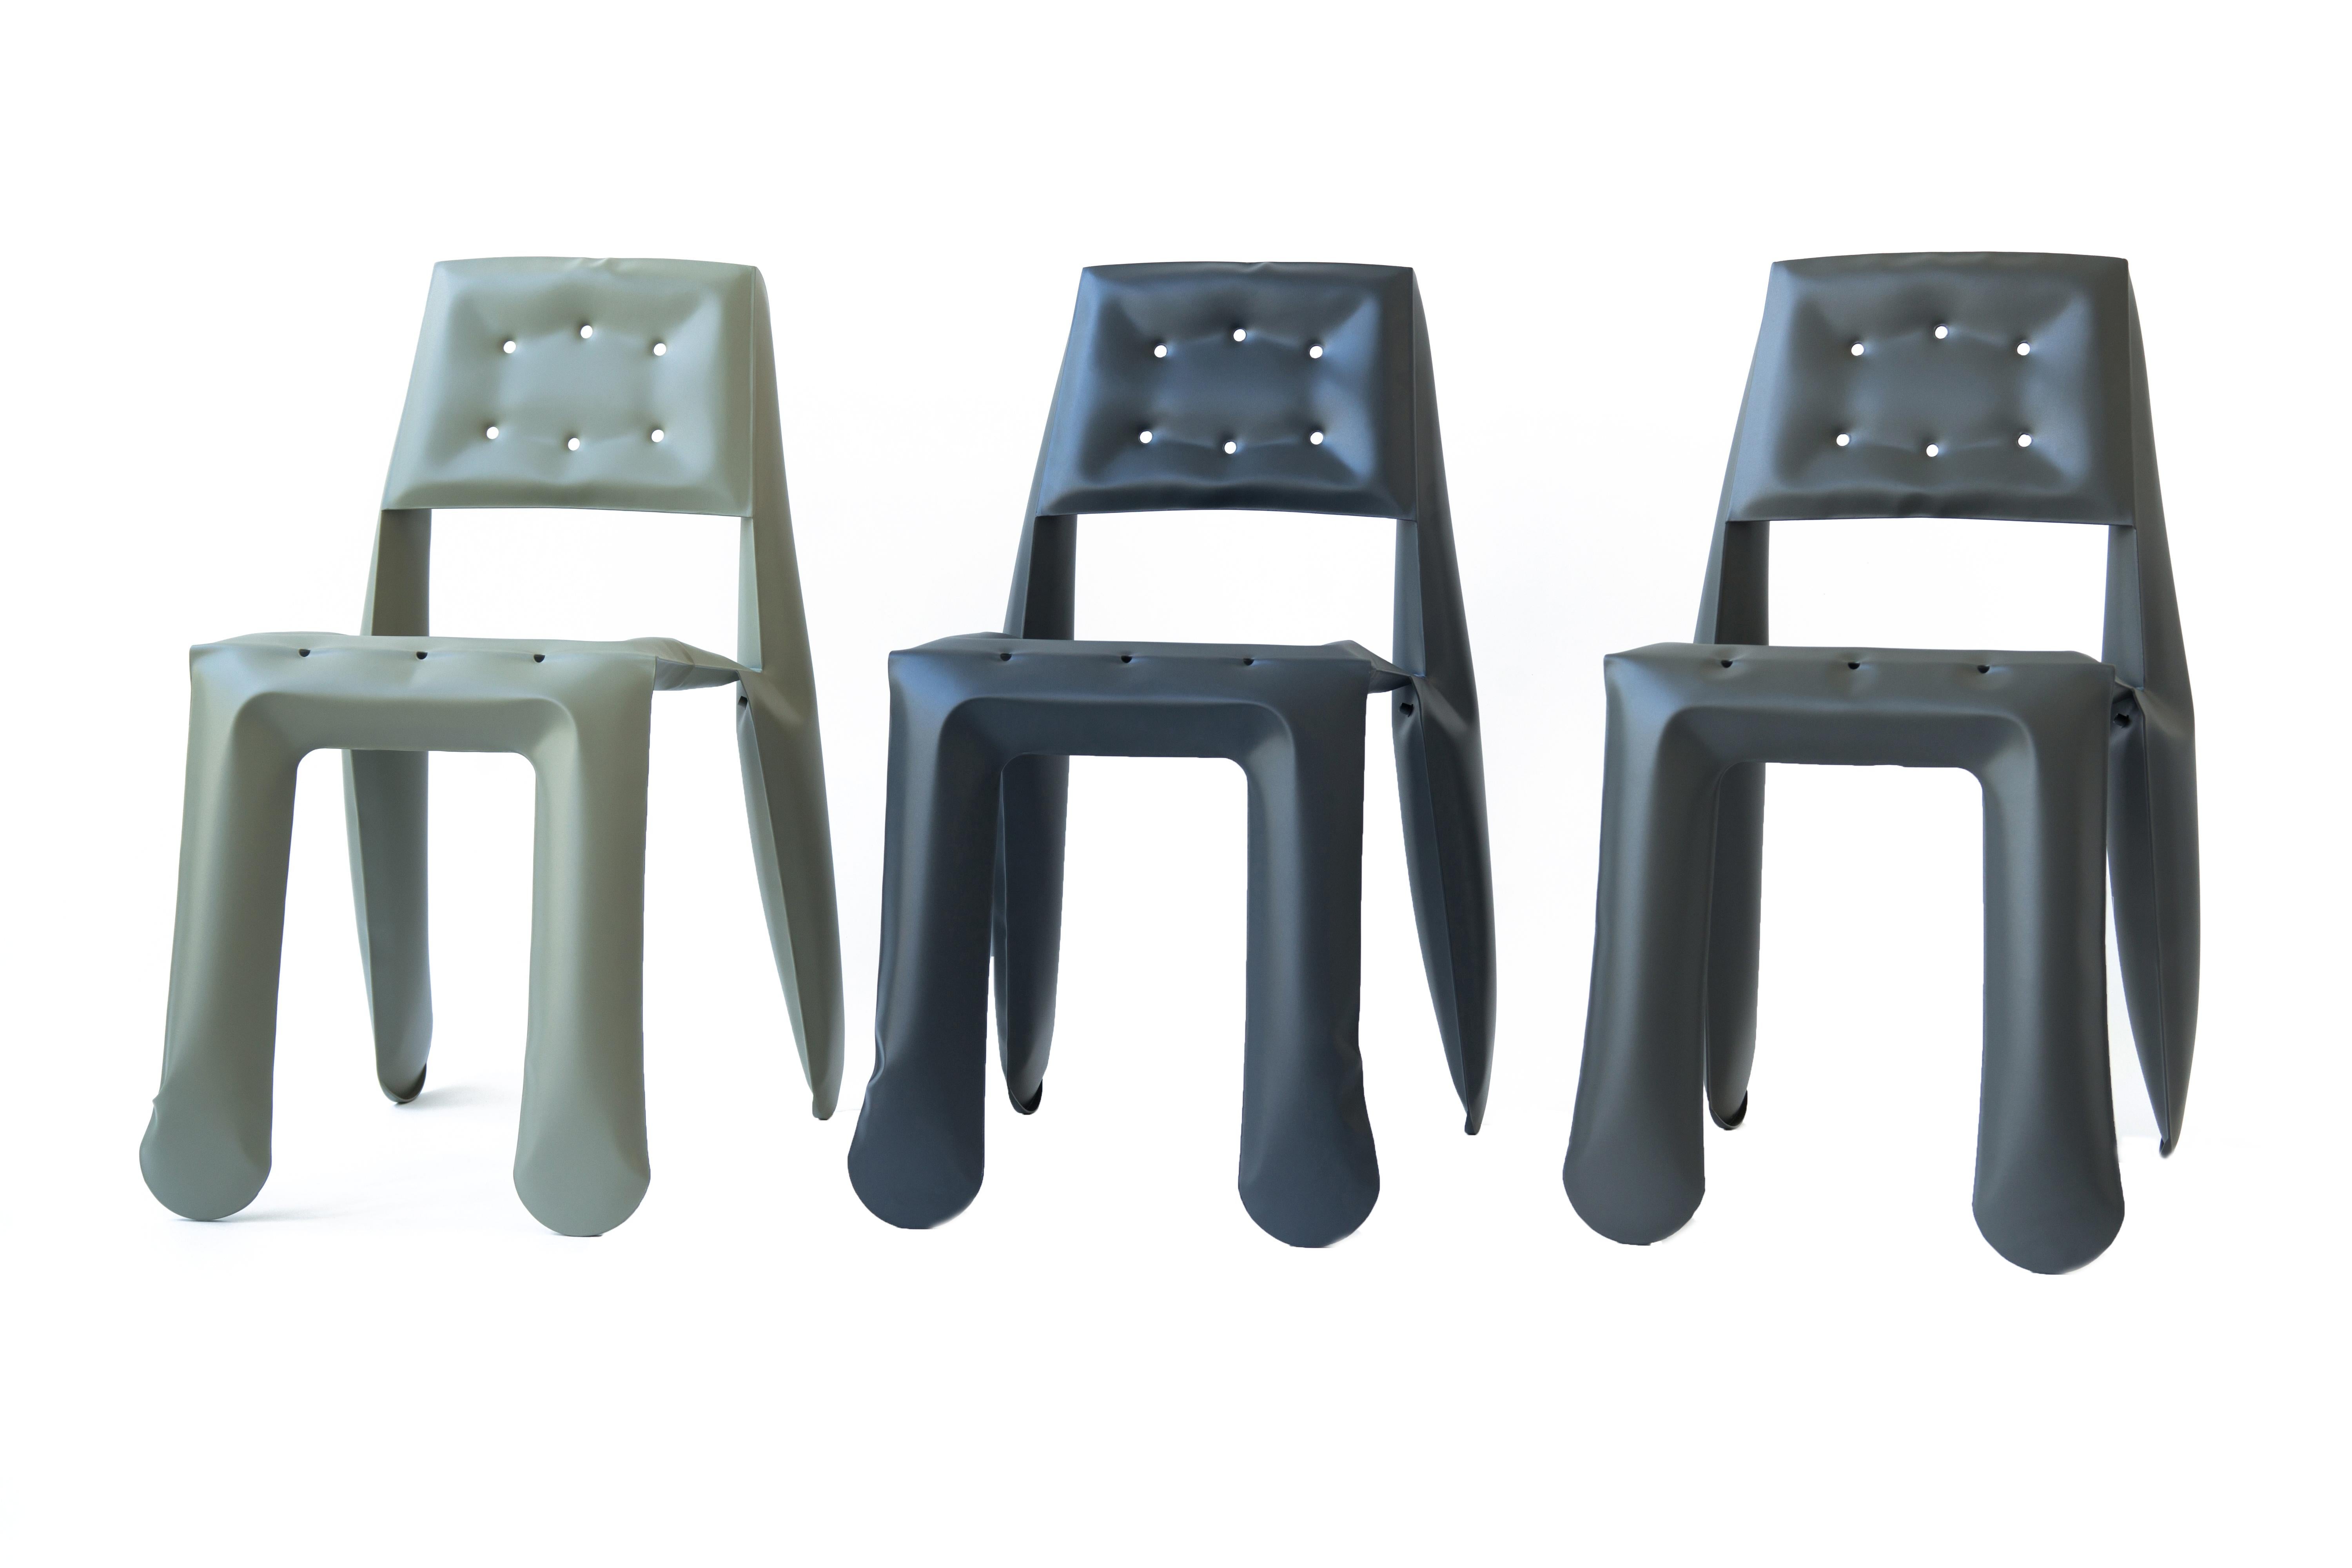 Polish Black Carbon Steel Chippensteel 0.5 Sculptural Chair by Zieta